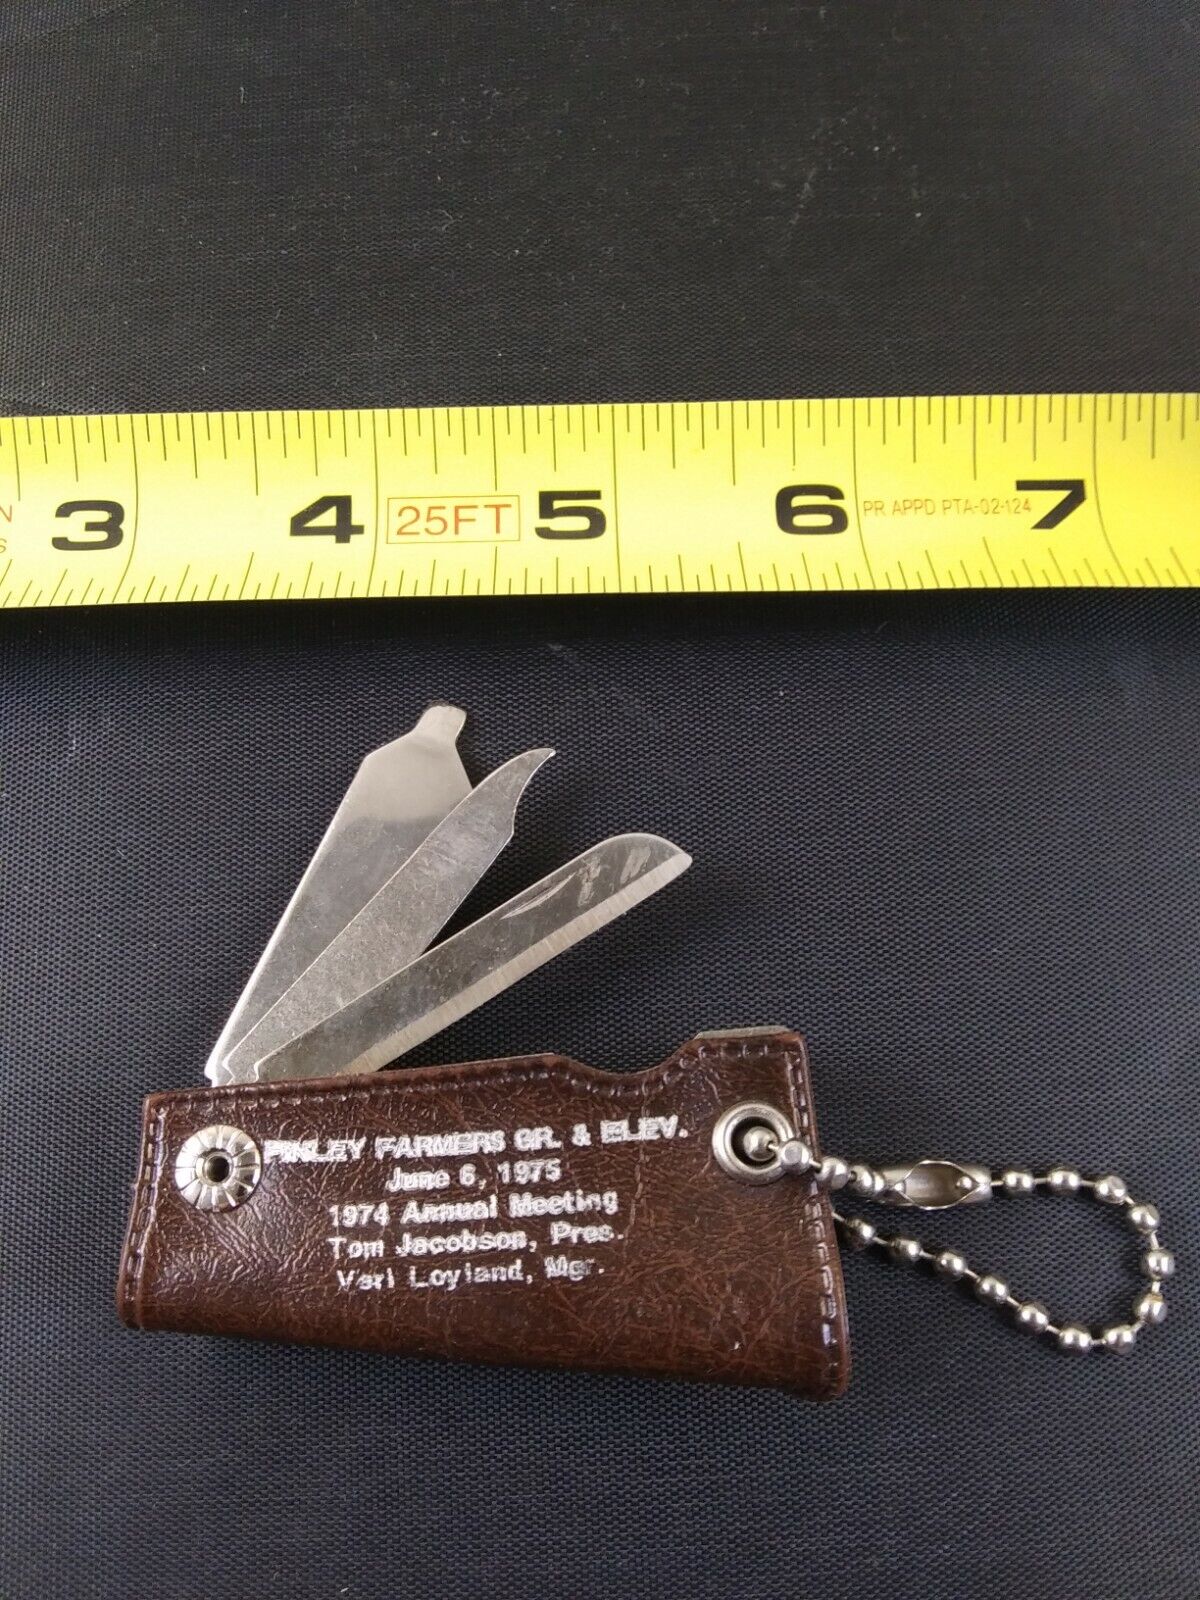 Vintage Finley Farmers Pocket Knife Keychain Key Ring Chain Style Hangtag *109-C